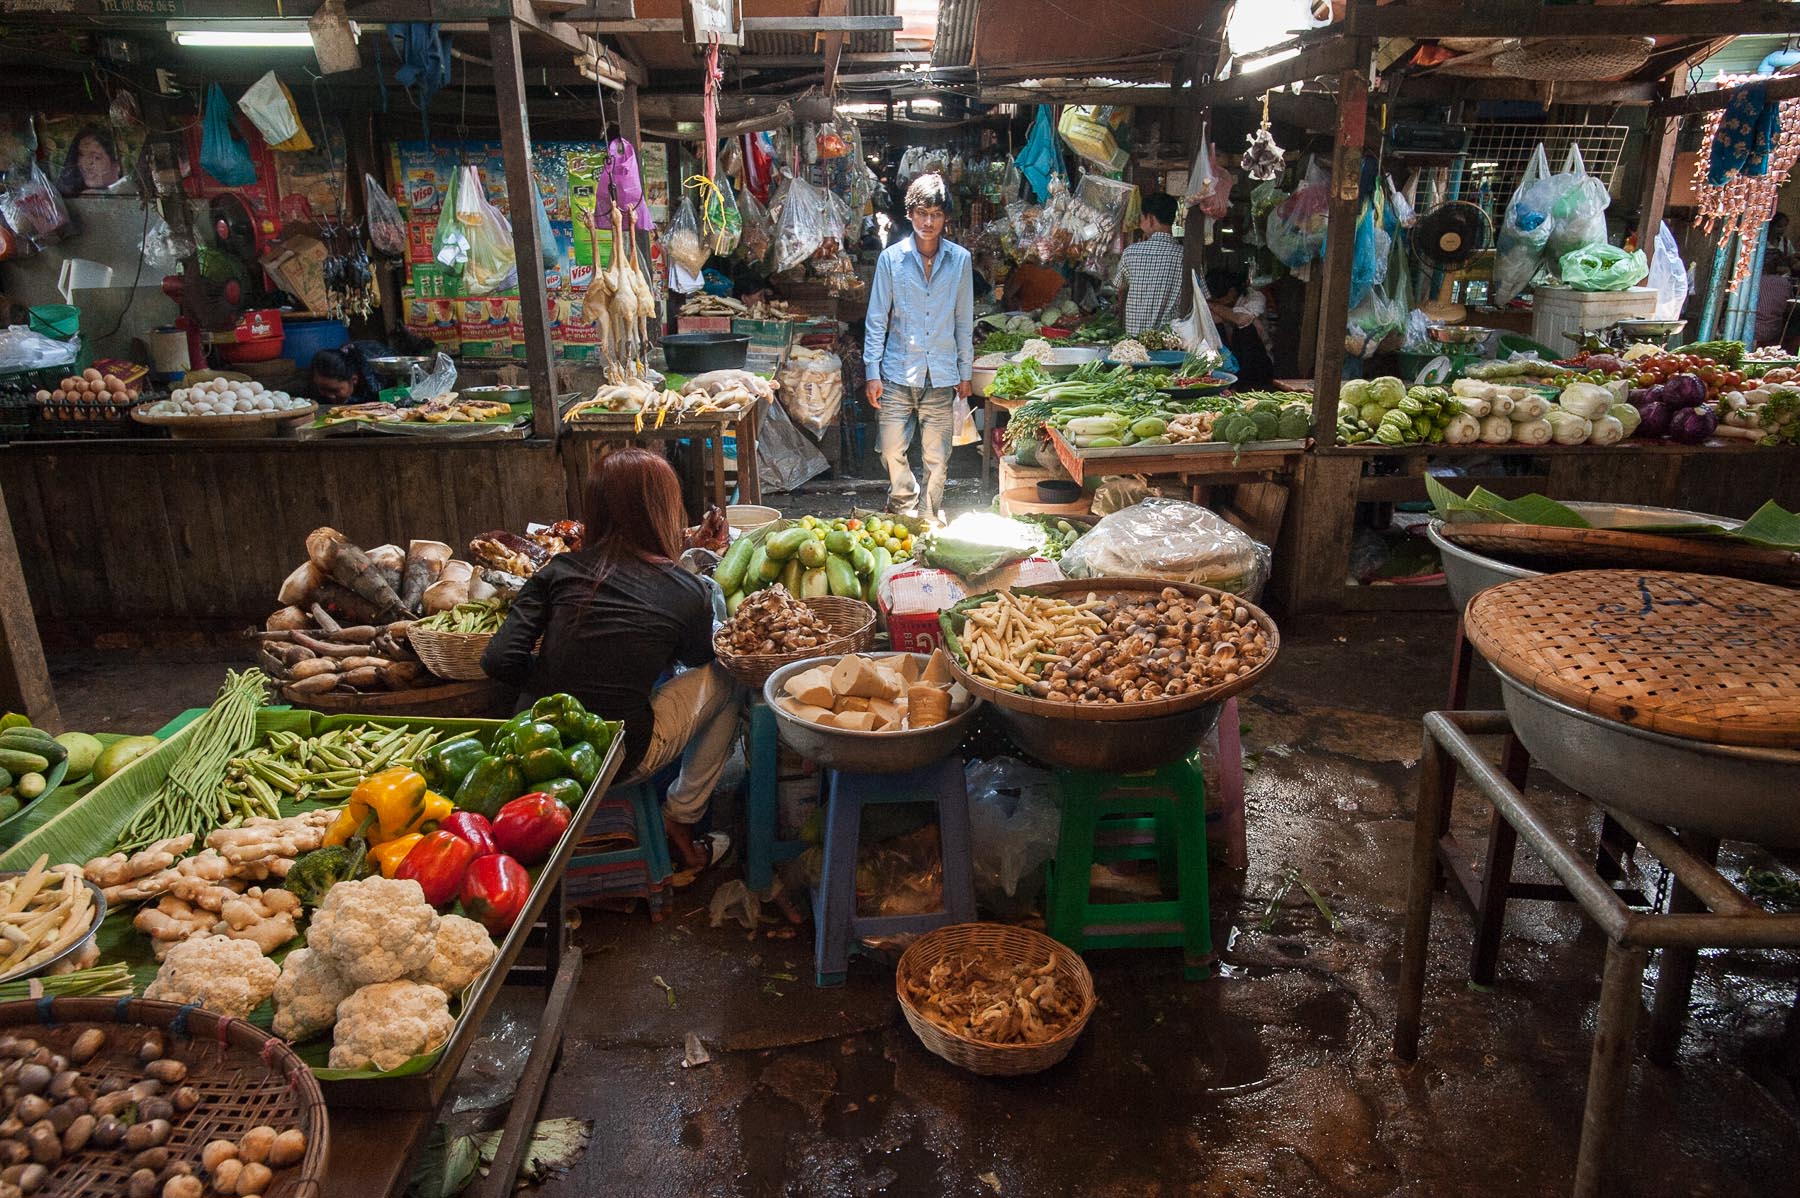 Russian Market food vendors and customers, Phnom Penh, Cambodia